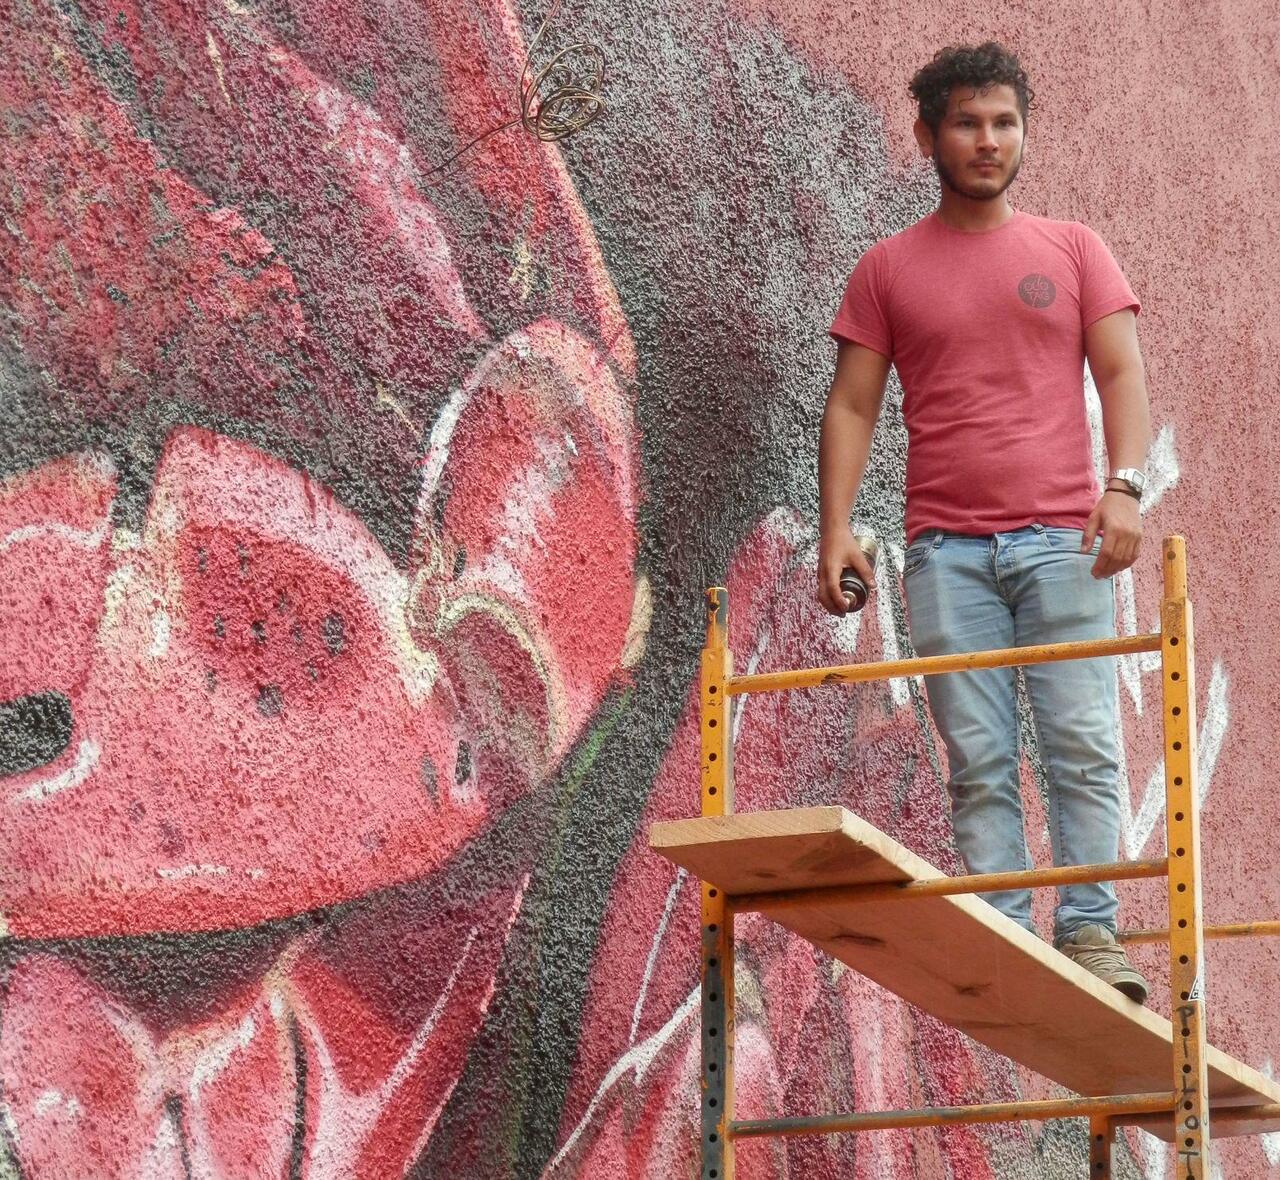 RT @JohnRMoffitt: #Houston #Graffiti #Streetart Duo tag is one of the great street artists from Mexico. http://t.co/j6xXJrAbK2